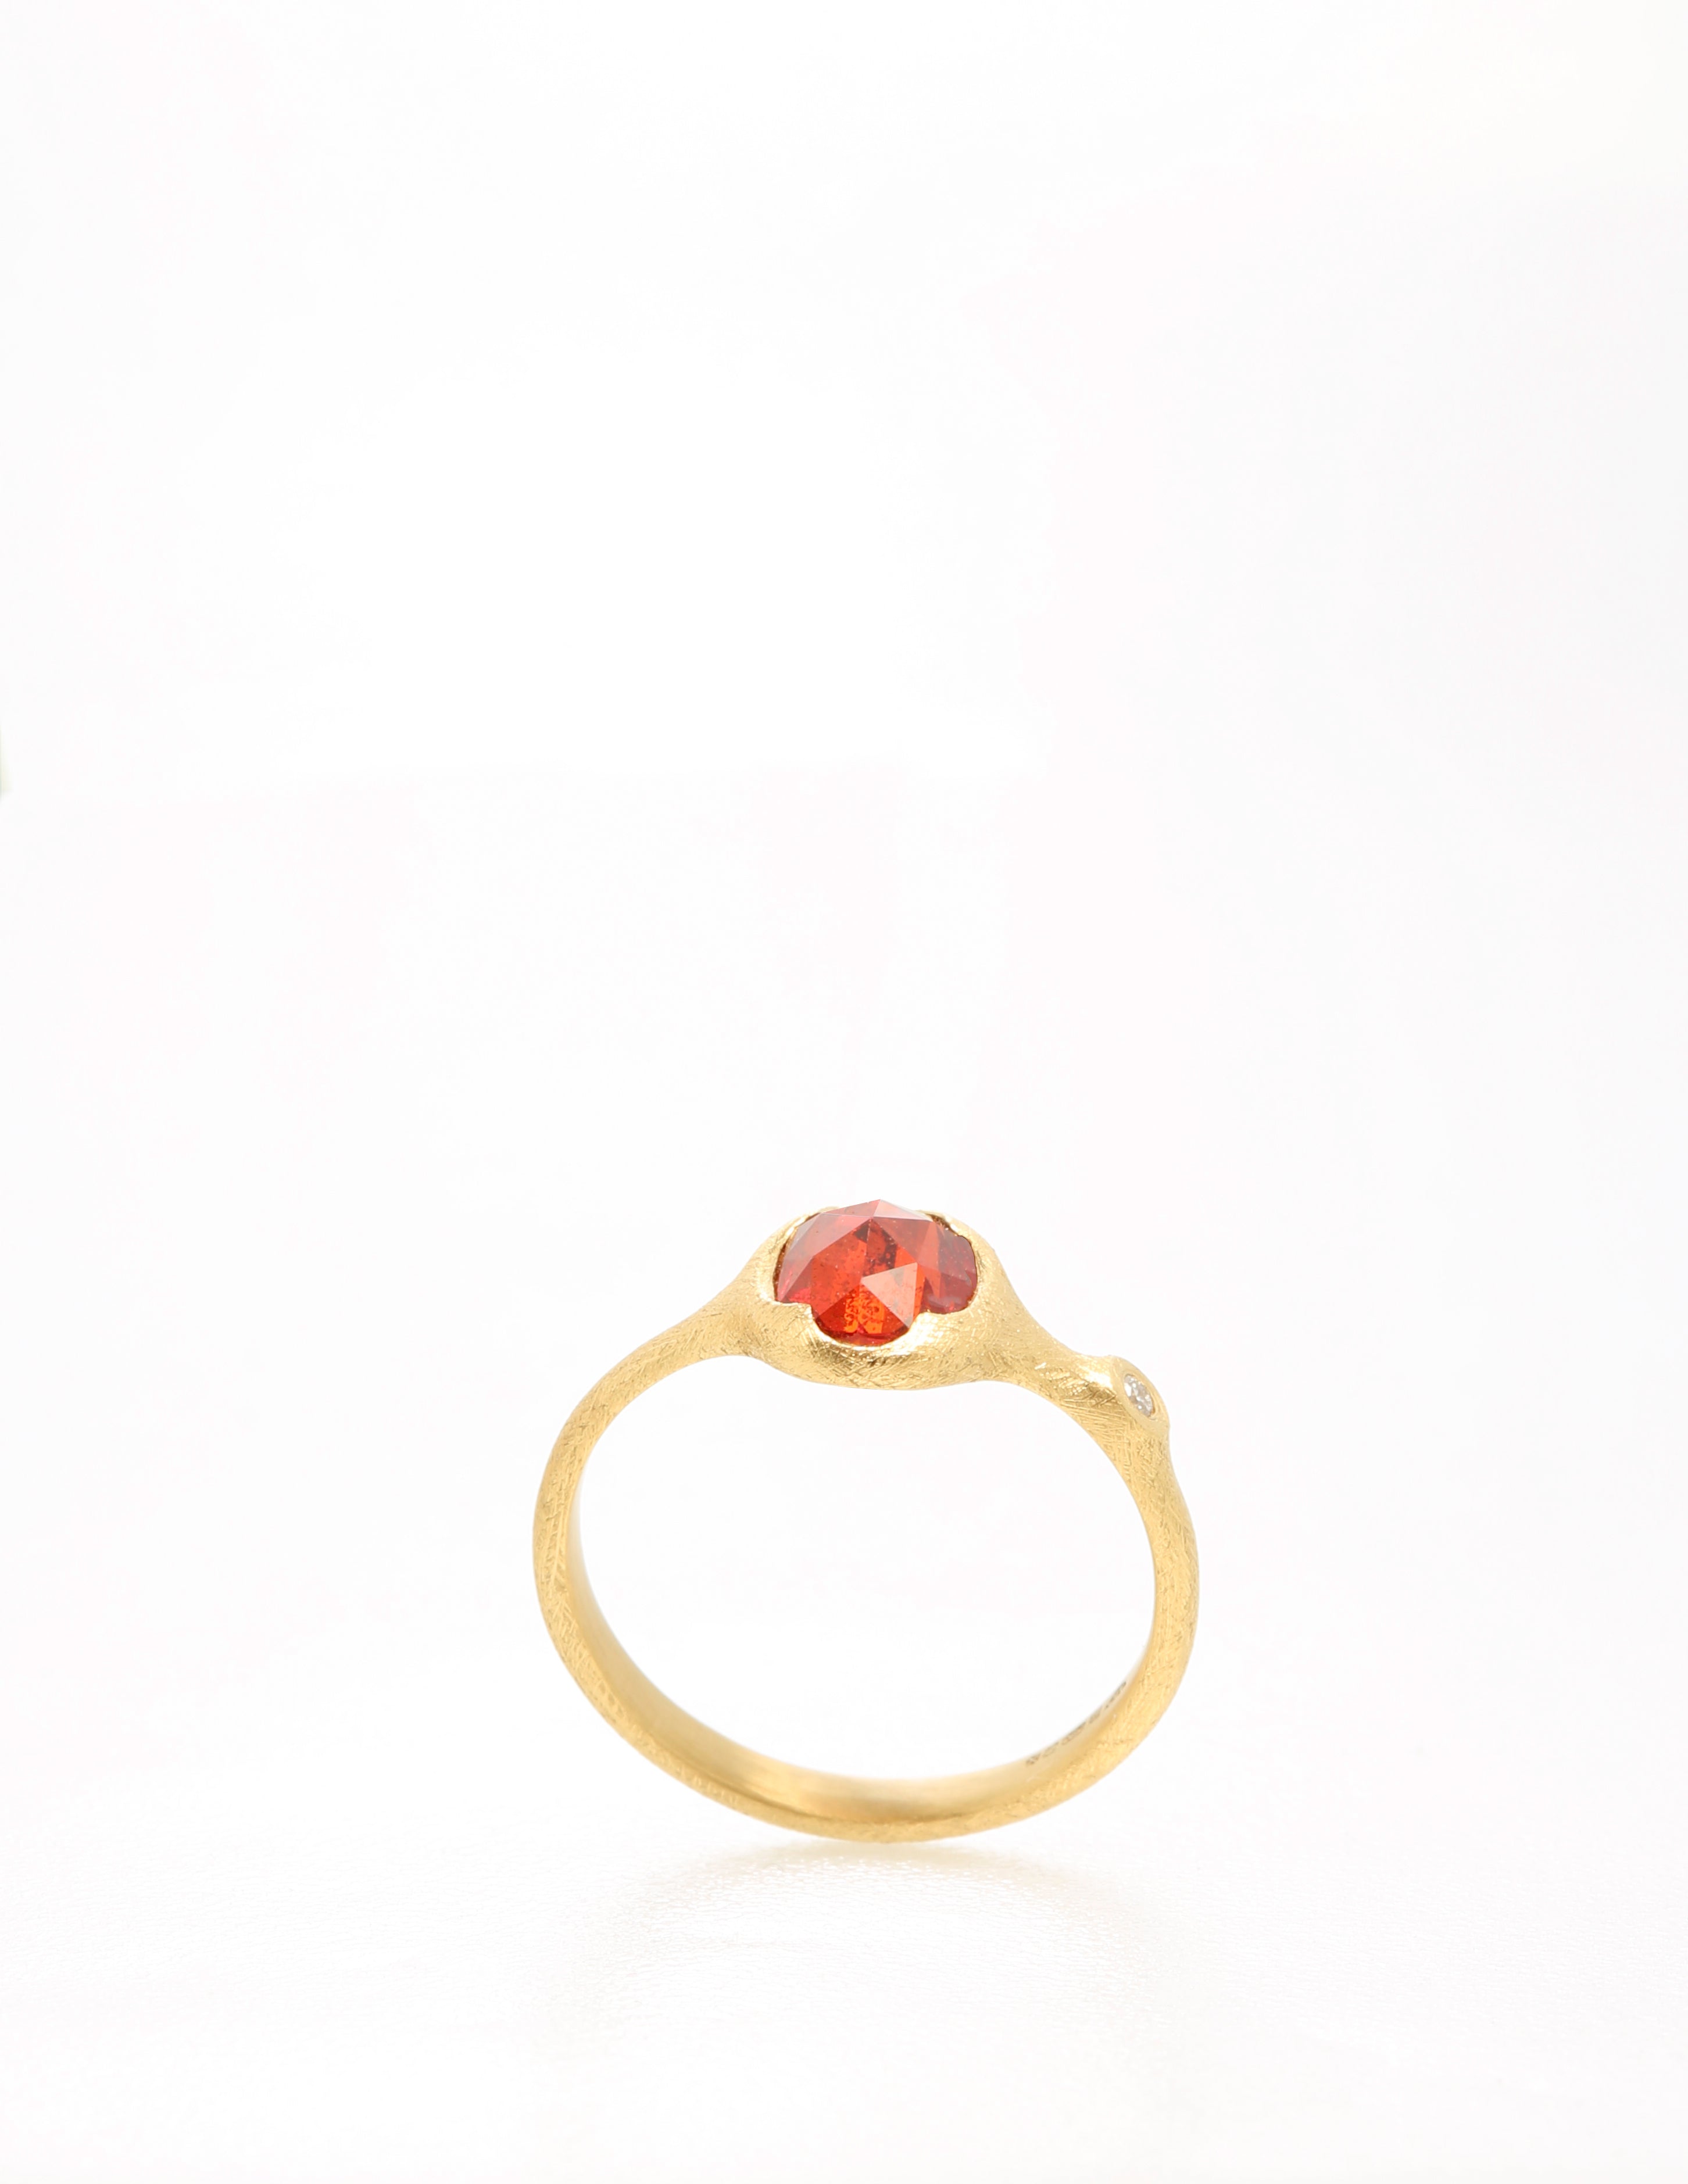 Orange saphire and diamond ring